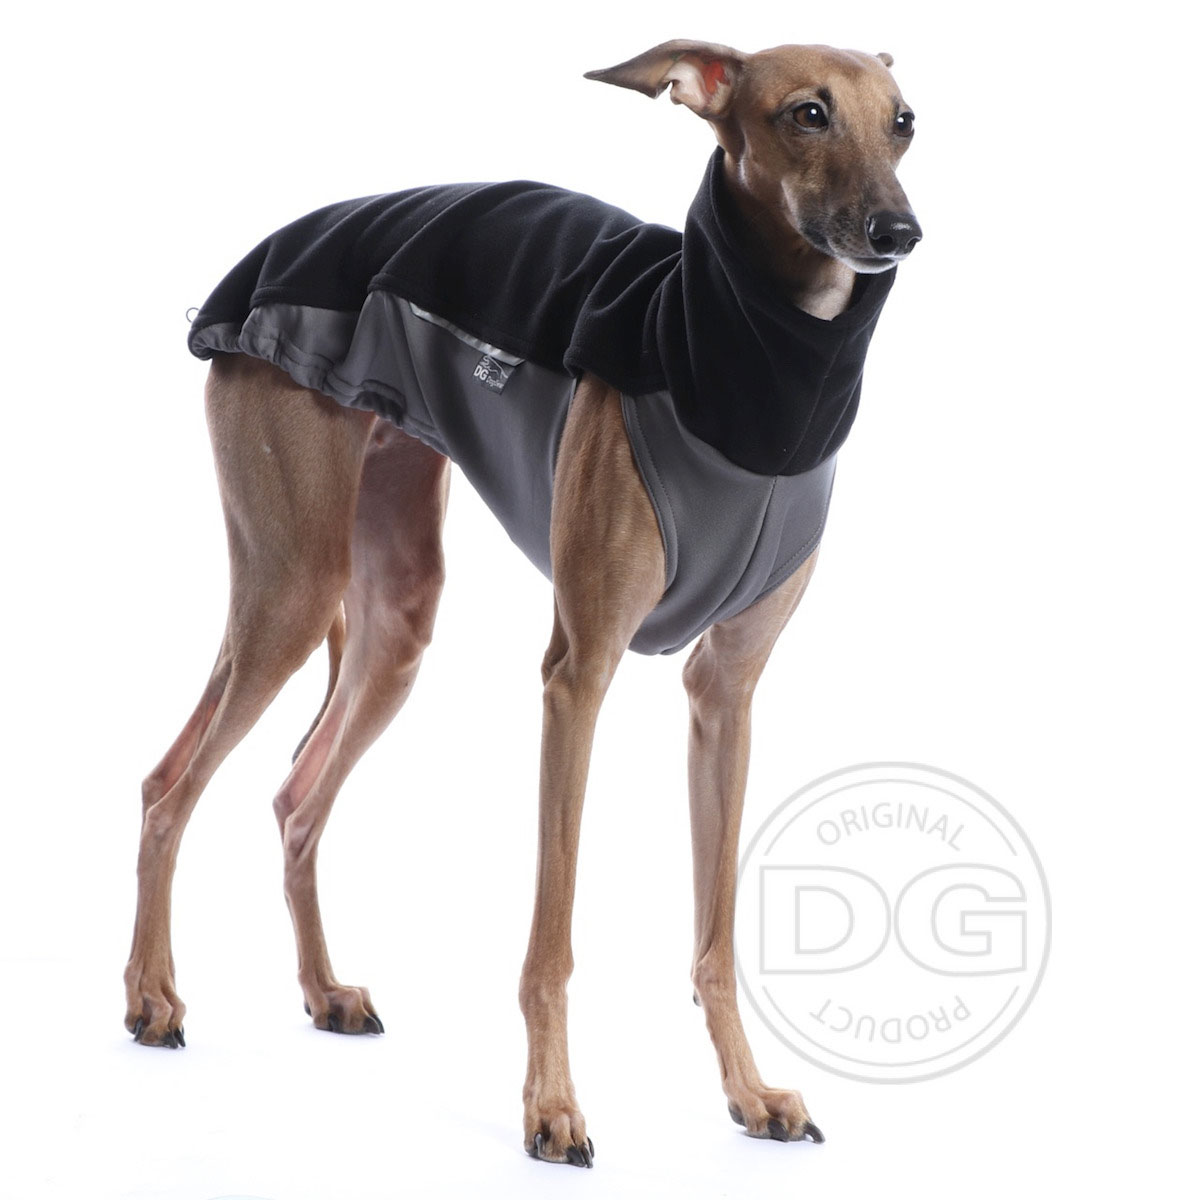 Italian greyhound jacket DG OUTDOOR TOP EXTREME - DG image 2